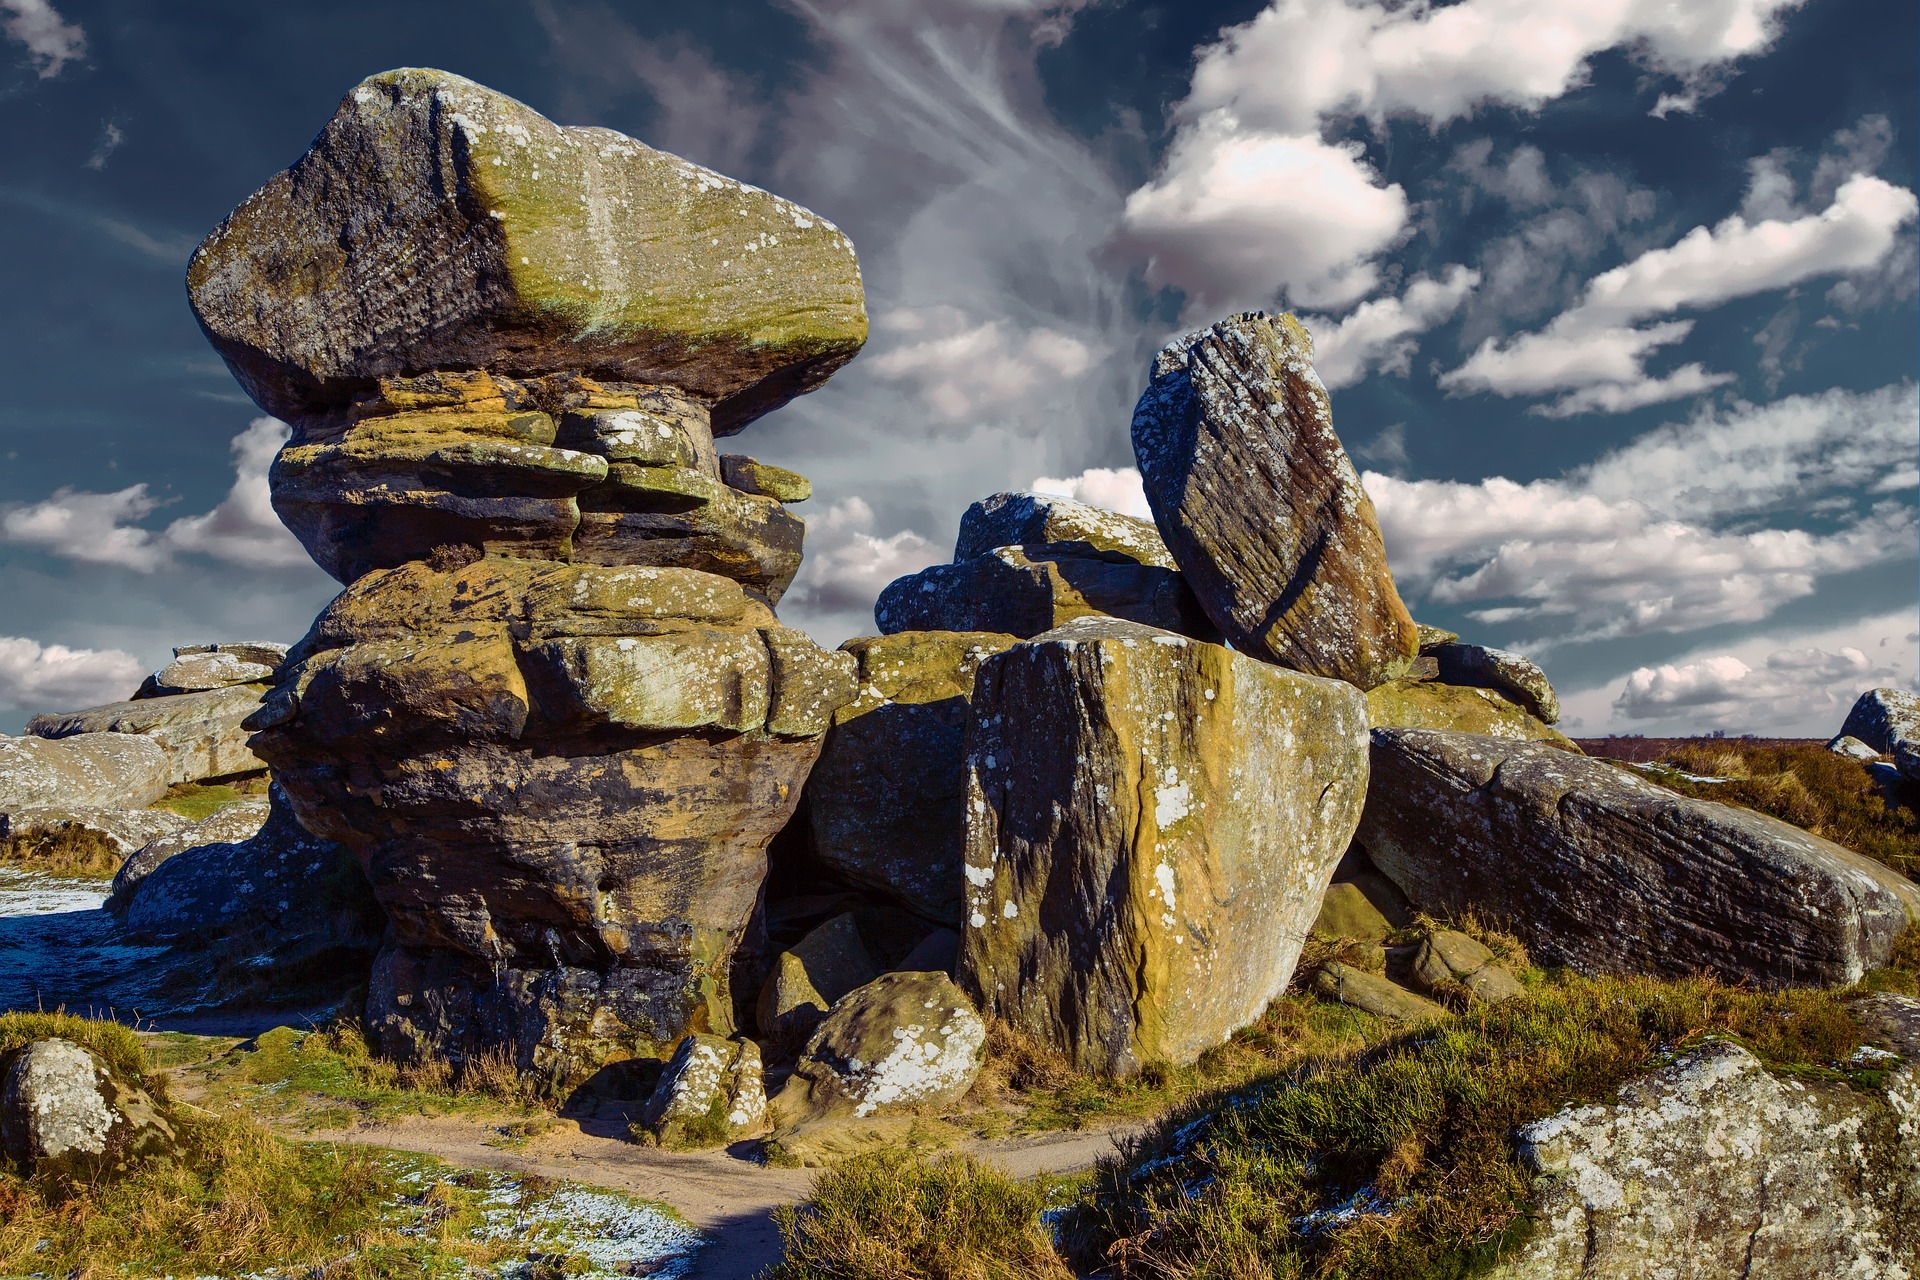 https://pixabay.com/en/rocks-outcrop-geology-landscape-2326883/